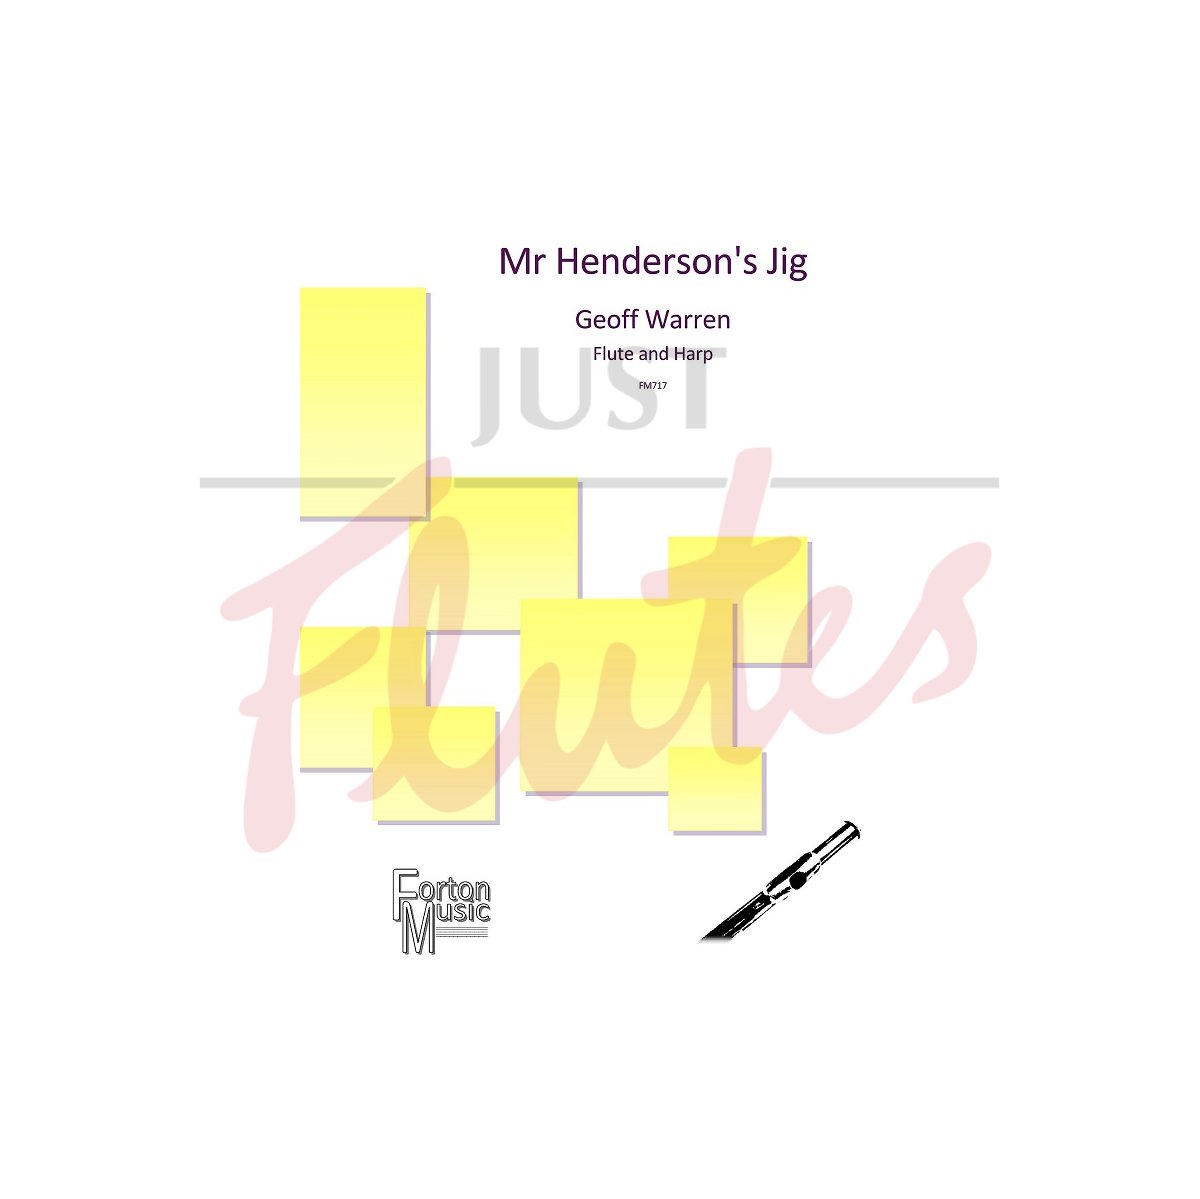 Mr. Henderson's Jig